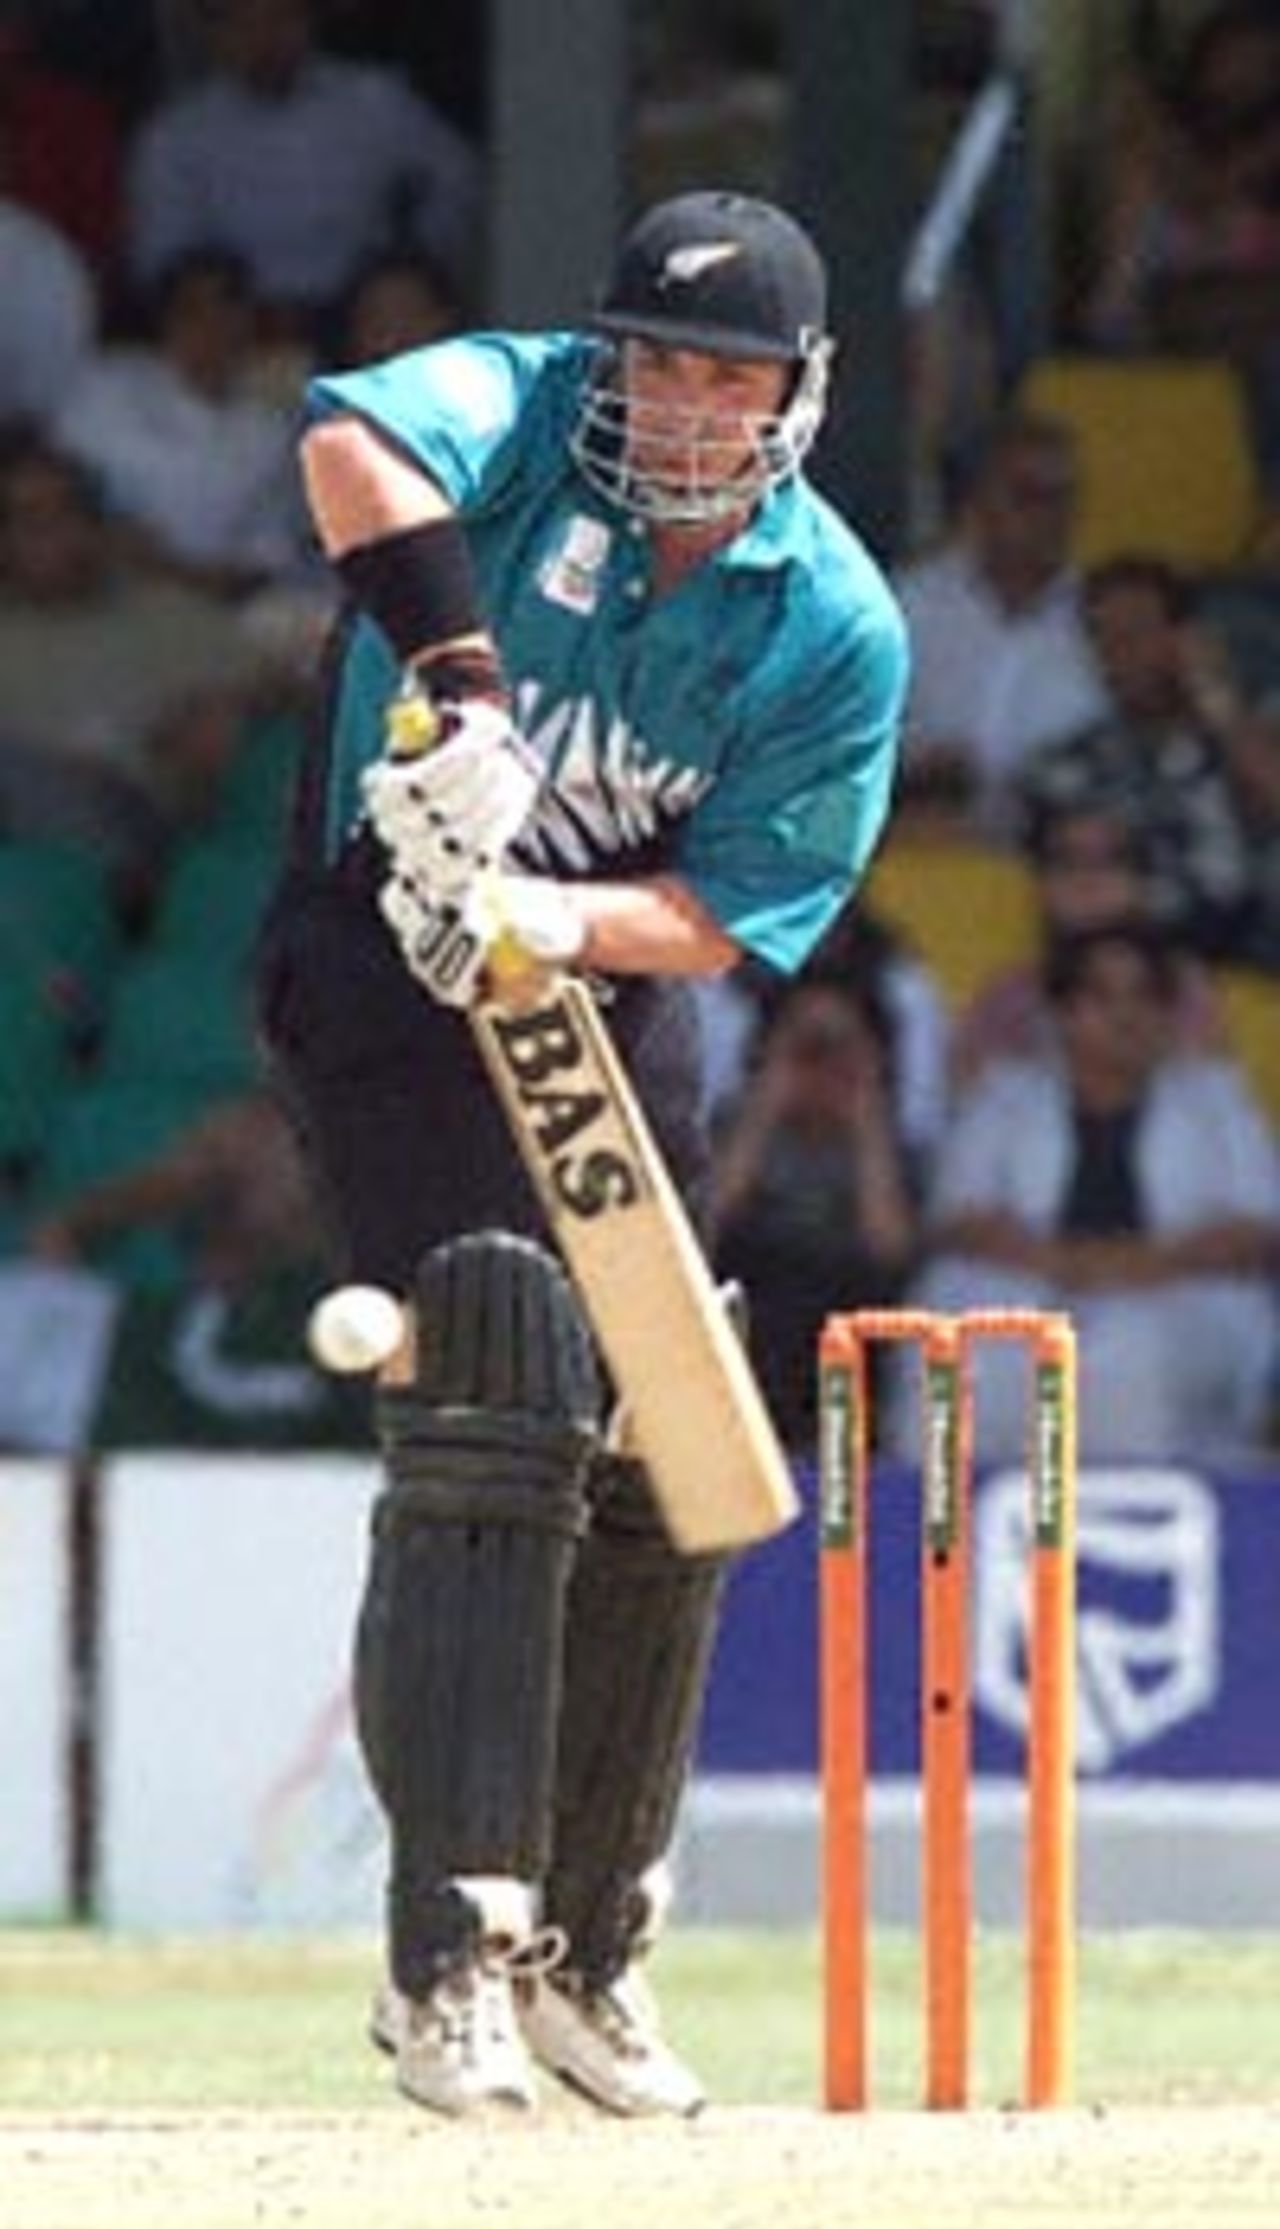 Roger Twose plays a sedate defensive shot. ICC KnockOut 2000/01, 1st Semi Final, New Zealand v Pakistan, Gymkhana Club Ground, Nairobi, 11 October 2000